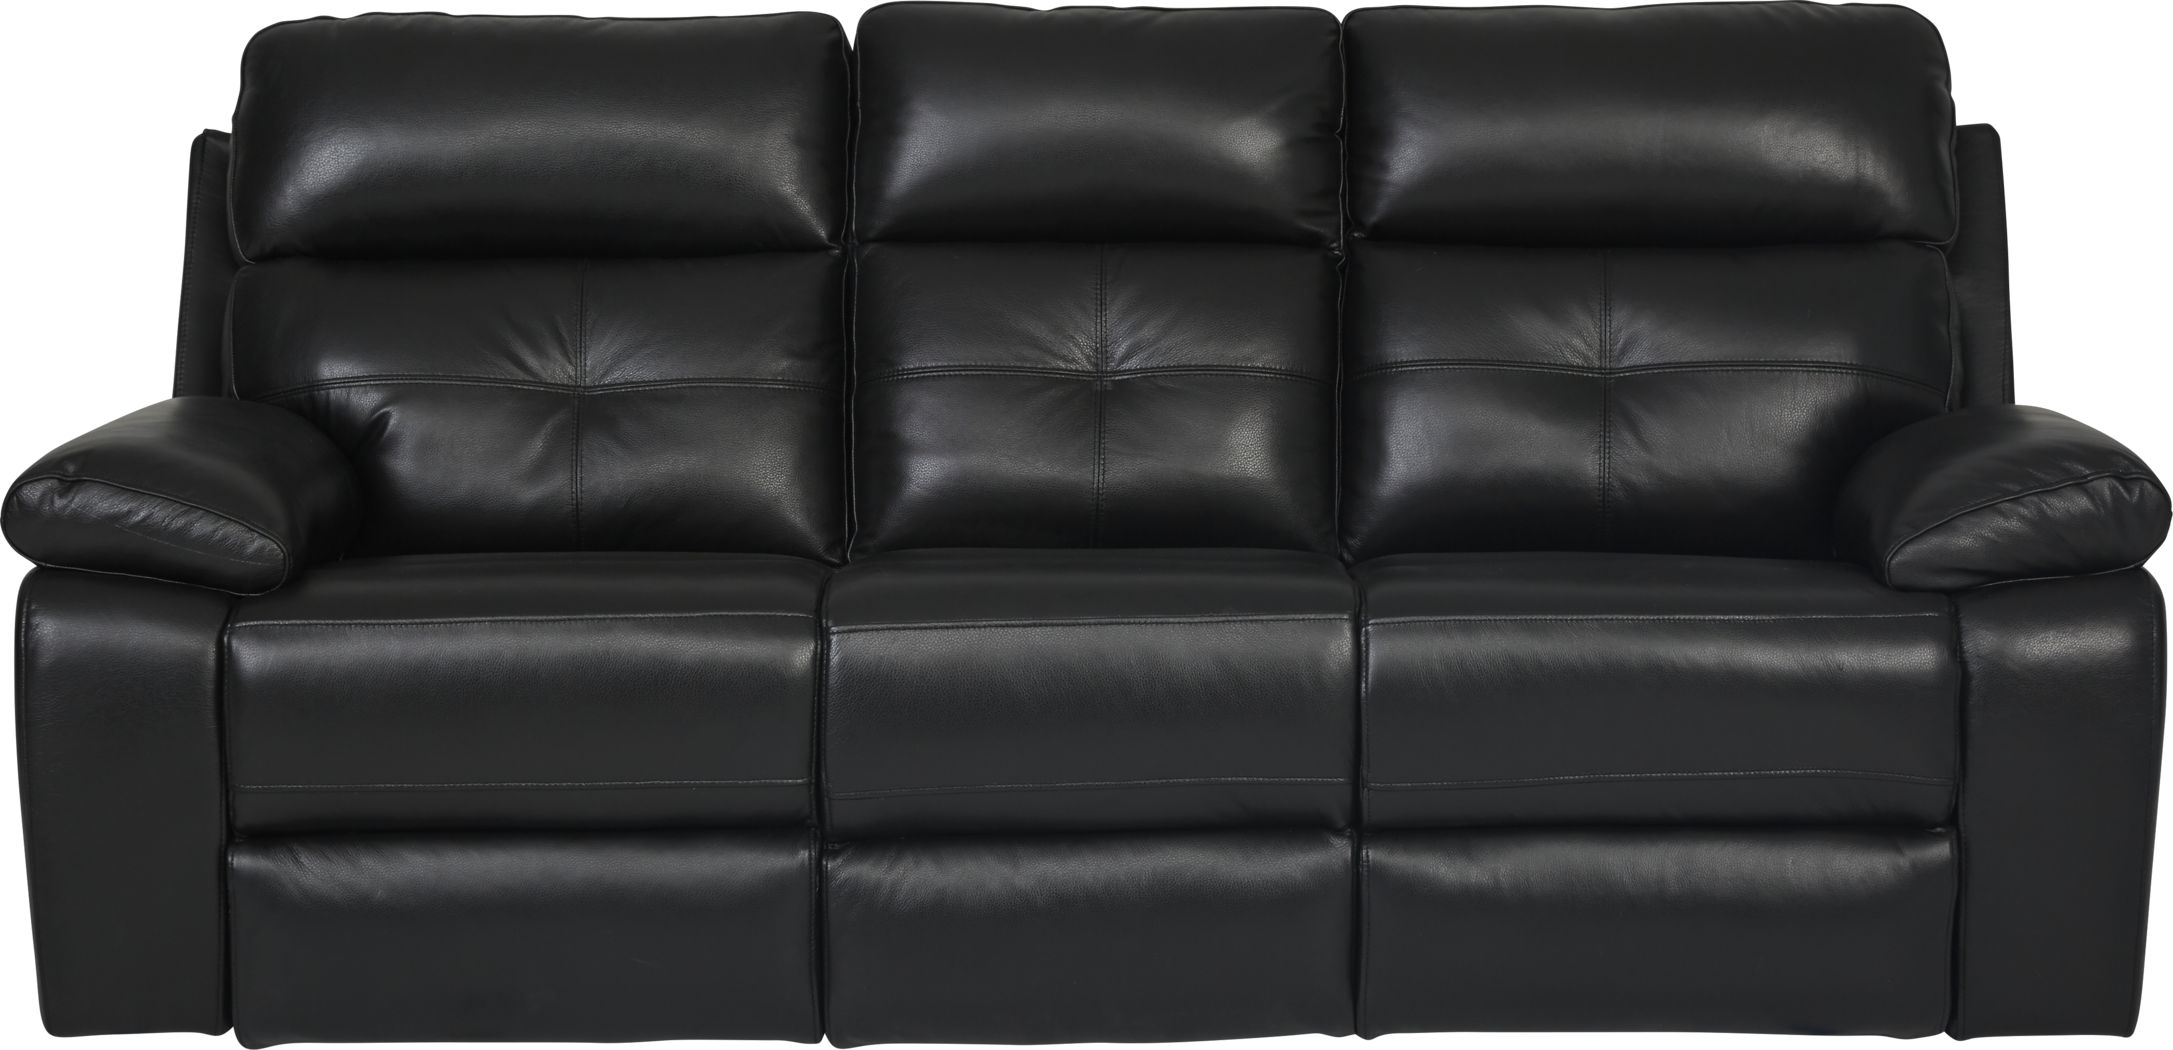 Cepano Black Leather Reclining Sofa, Black Leather Reclining Sofas